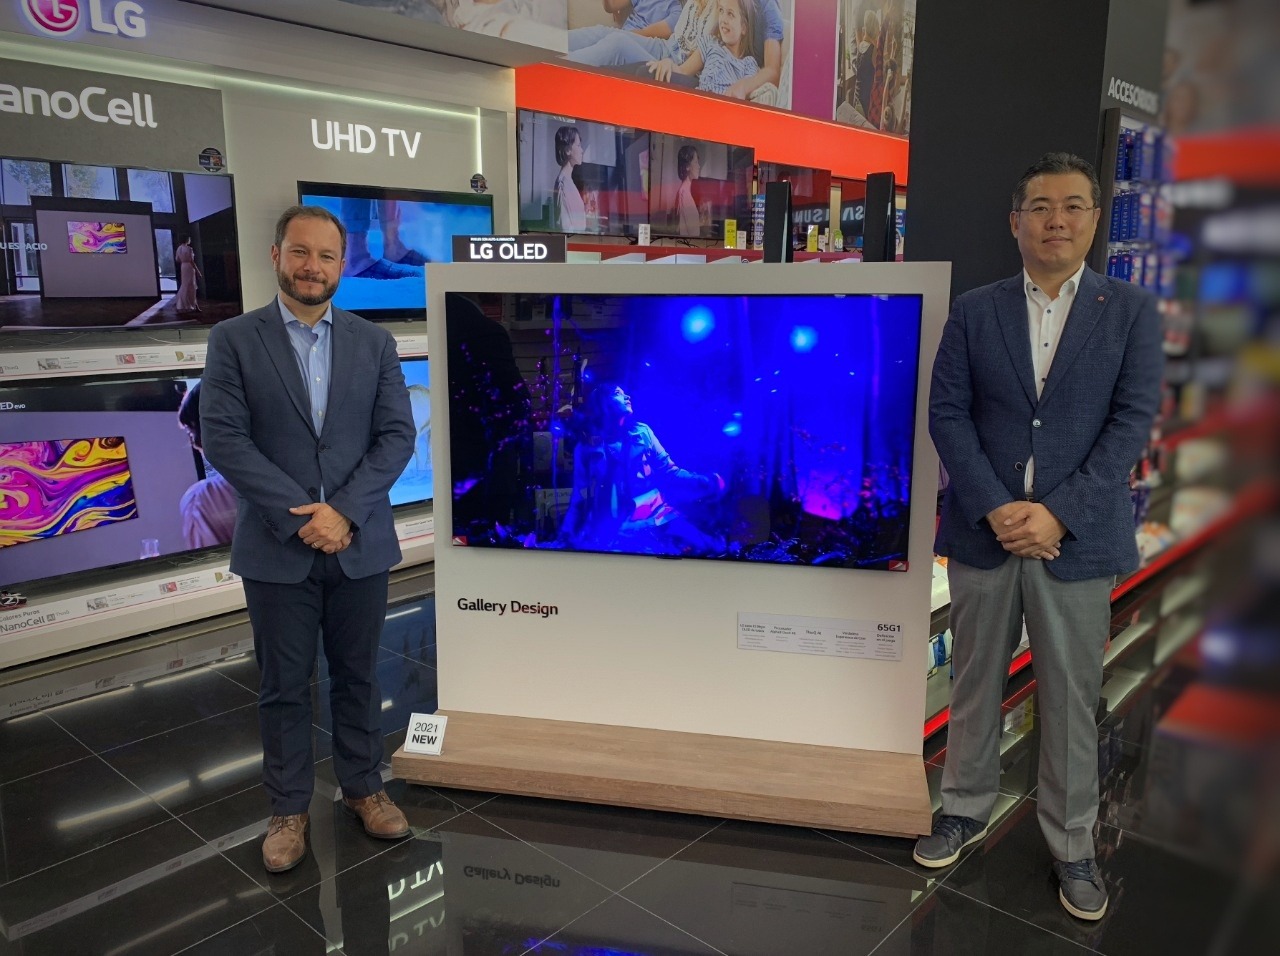 Enciende tu mundo con LG OLED TV LG Electronics trae a Tiendas MAX